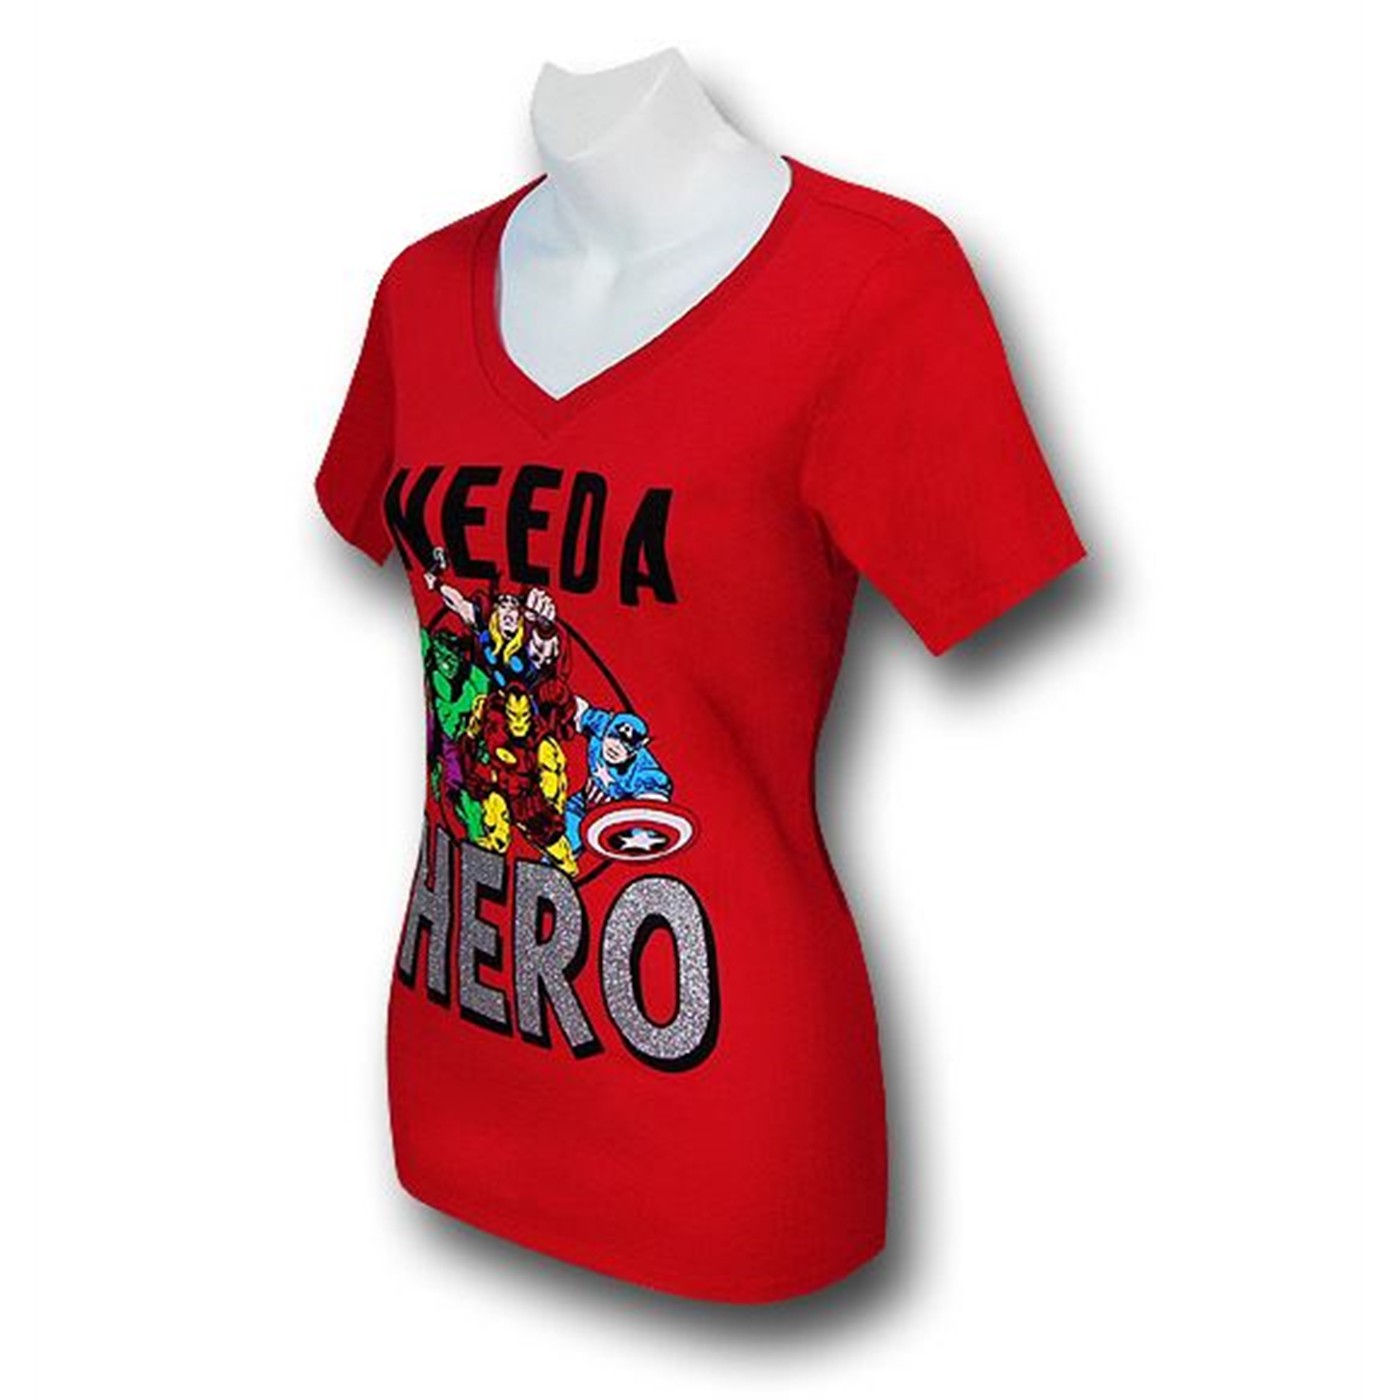 Marvel Need A Hero Juniors V-Neck T-Shirt